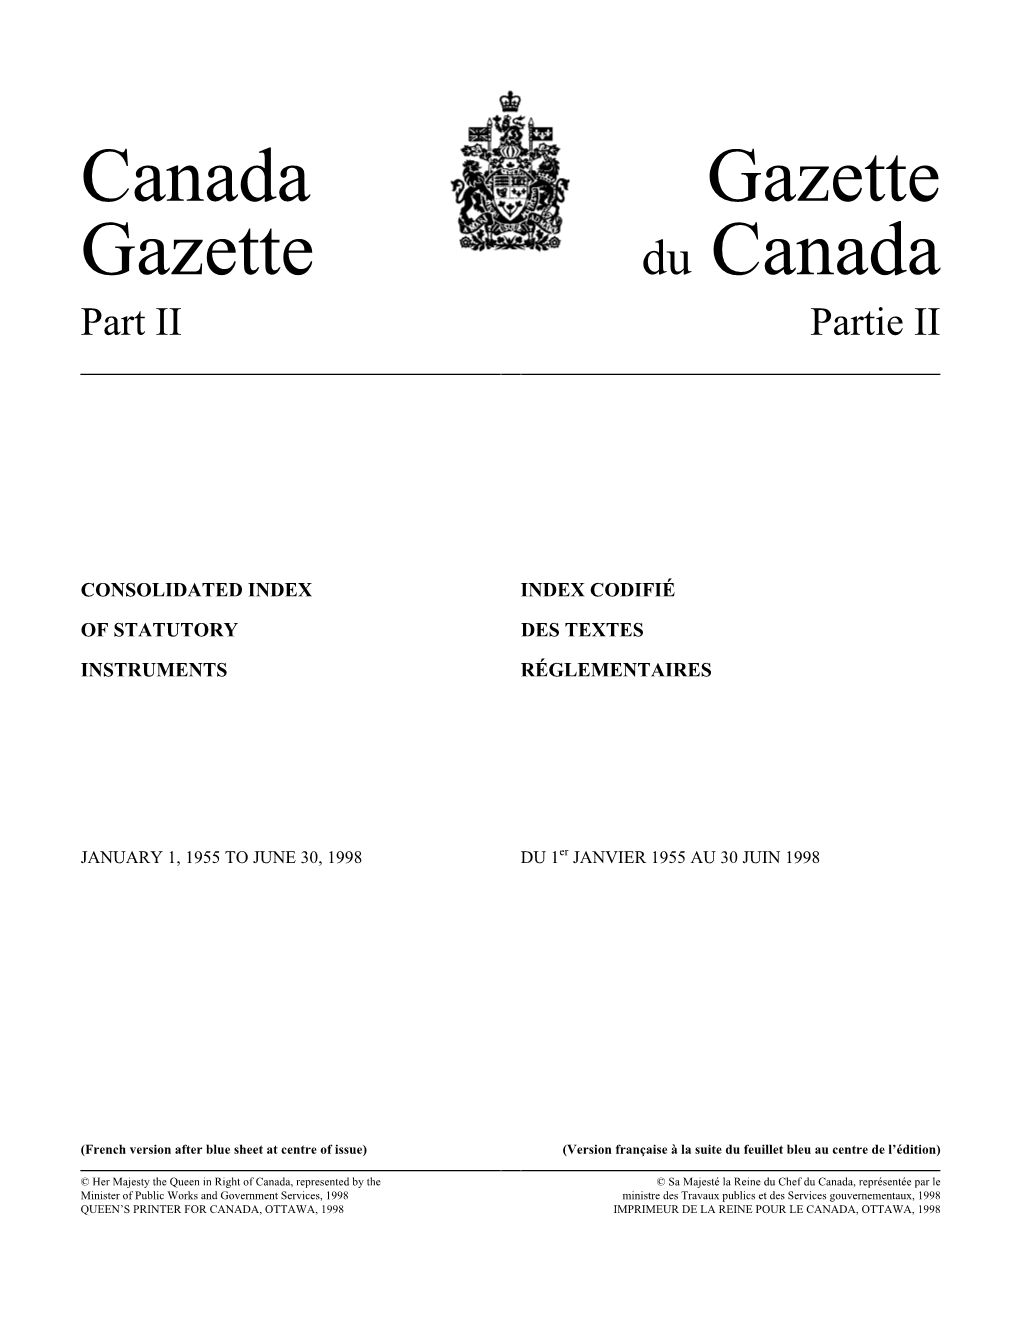 Canada Gazette, Part II, Consolidated Index